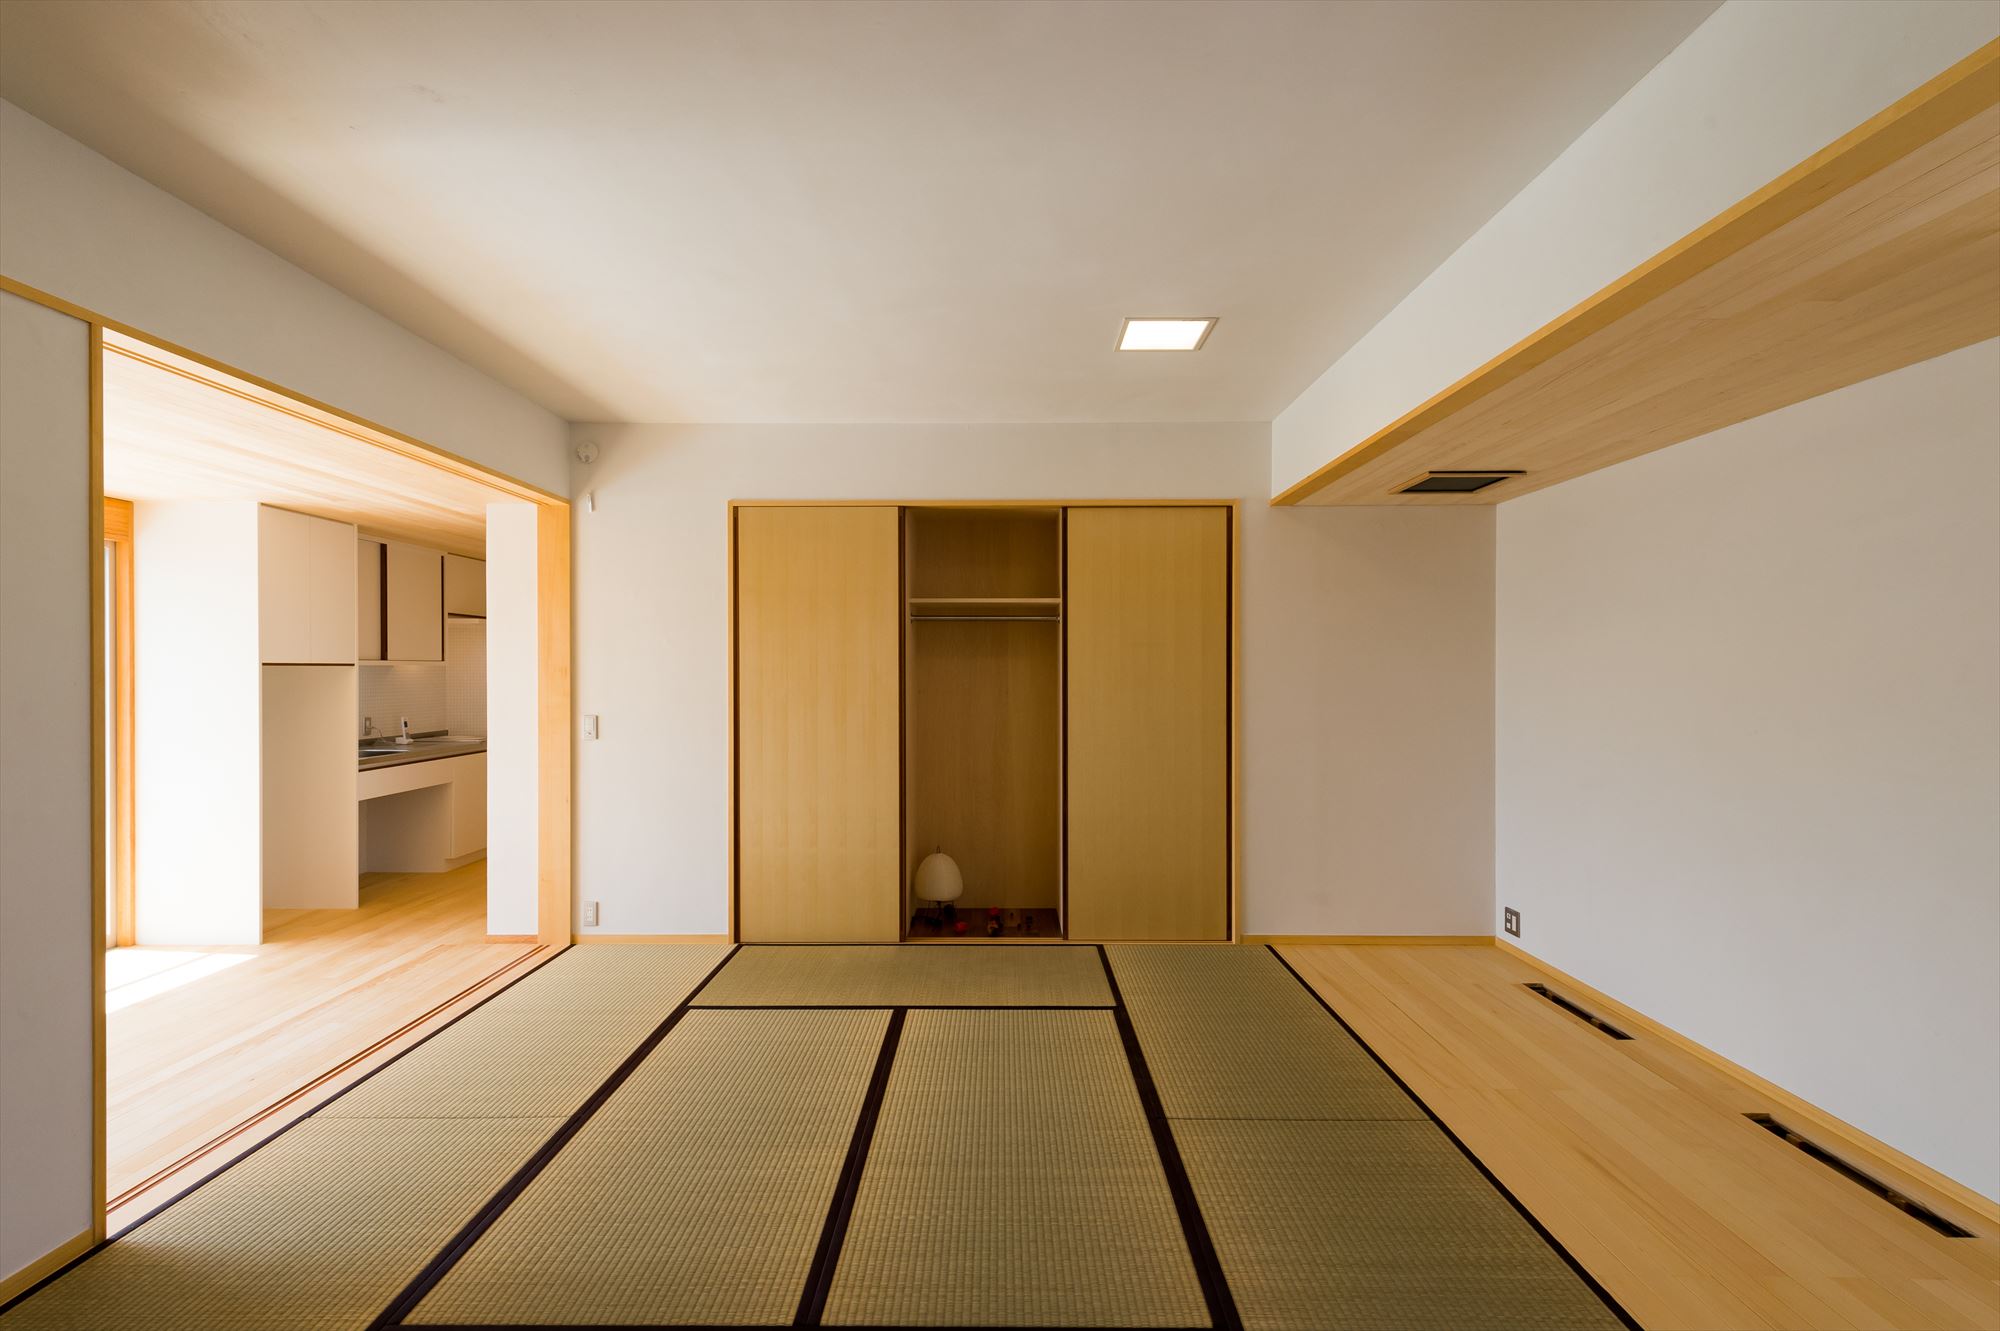 Modern Japanese style duplex